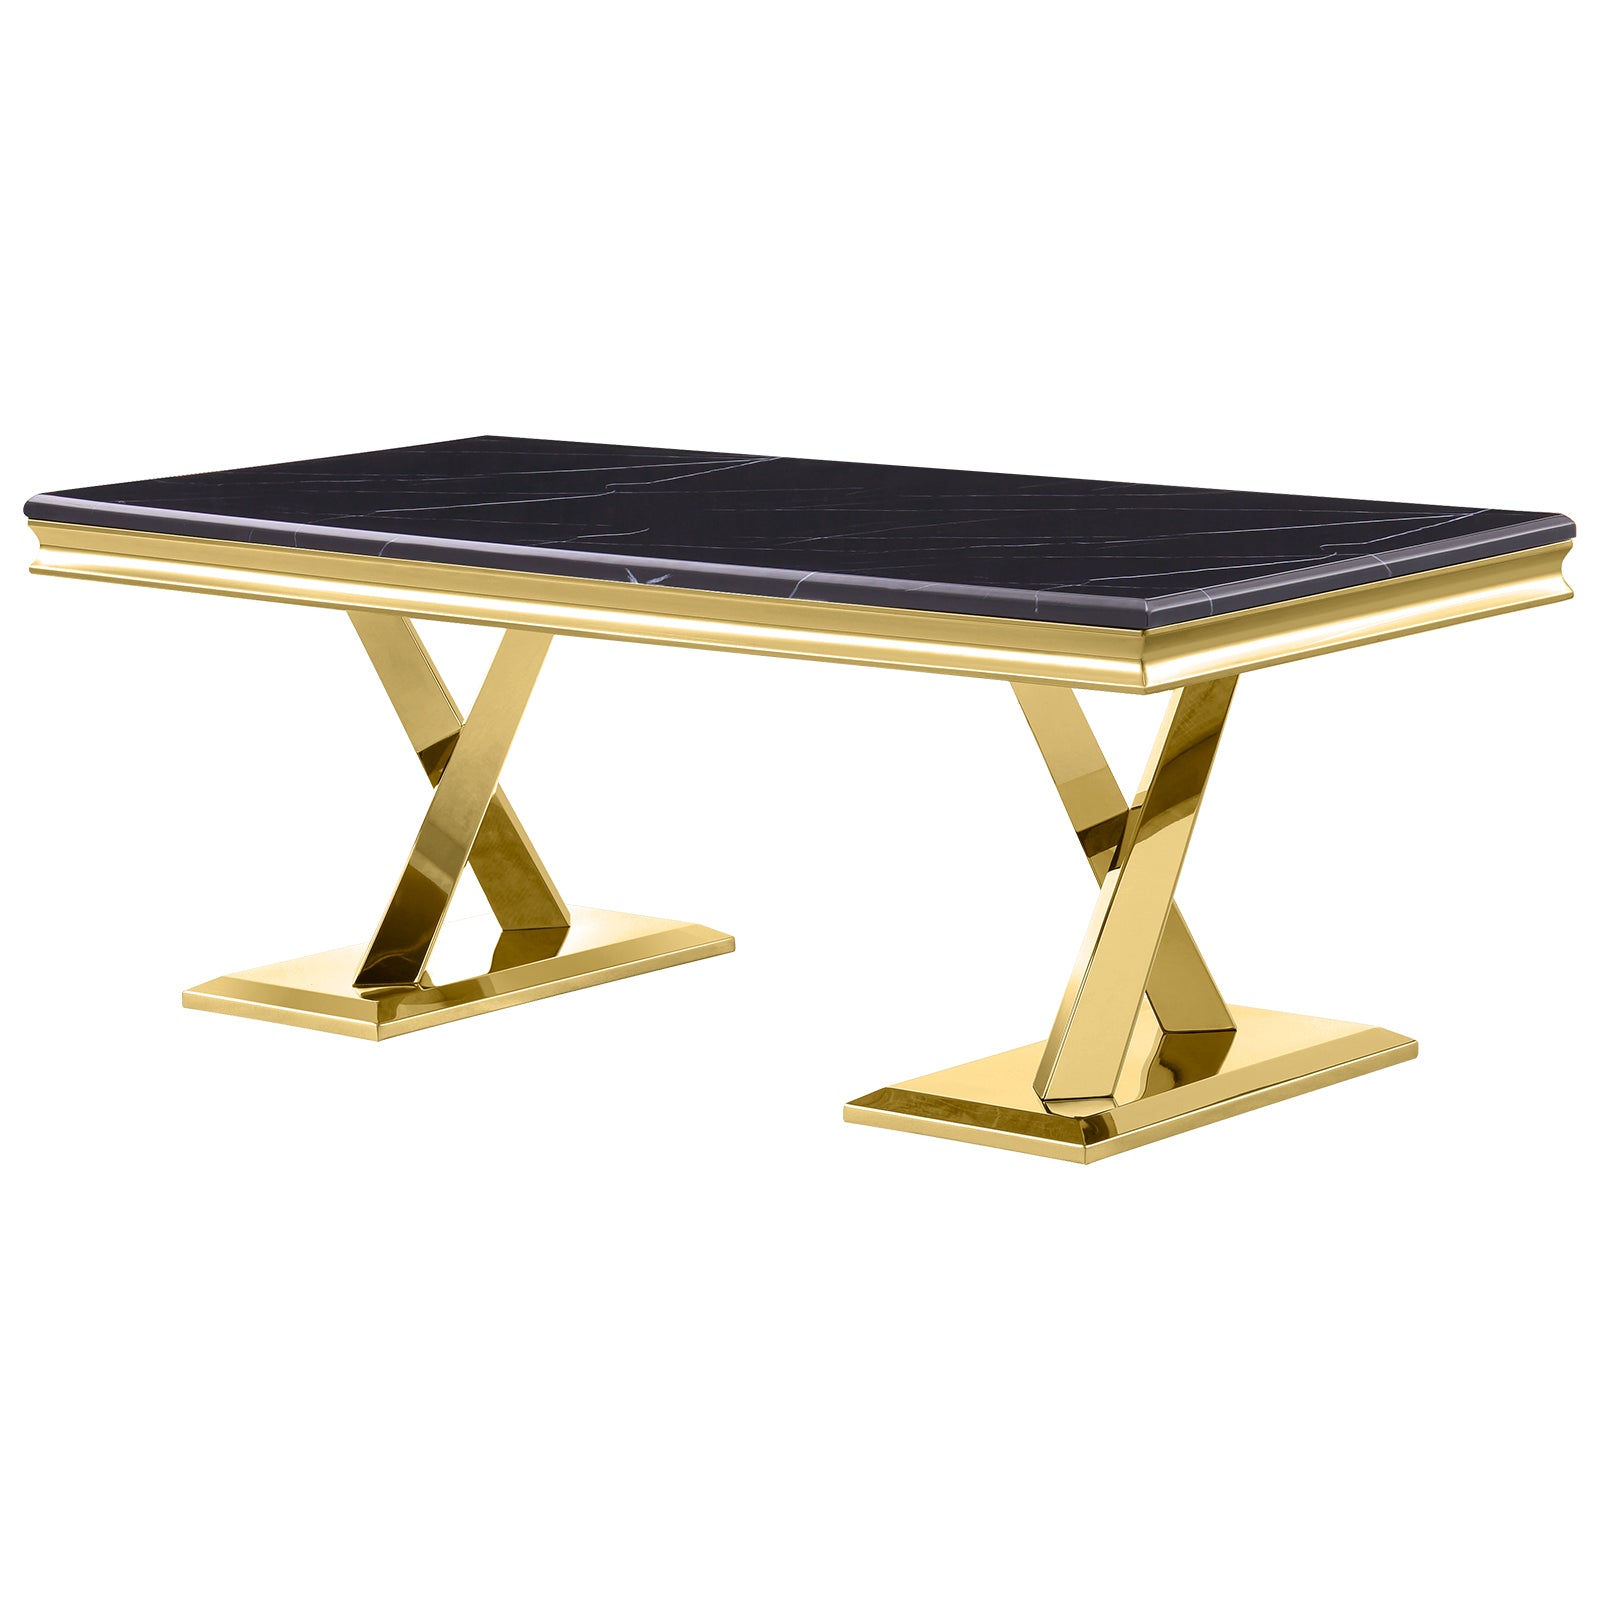 Black Gold Living room table Set | X Metal Base | L202